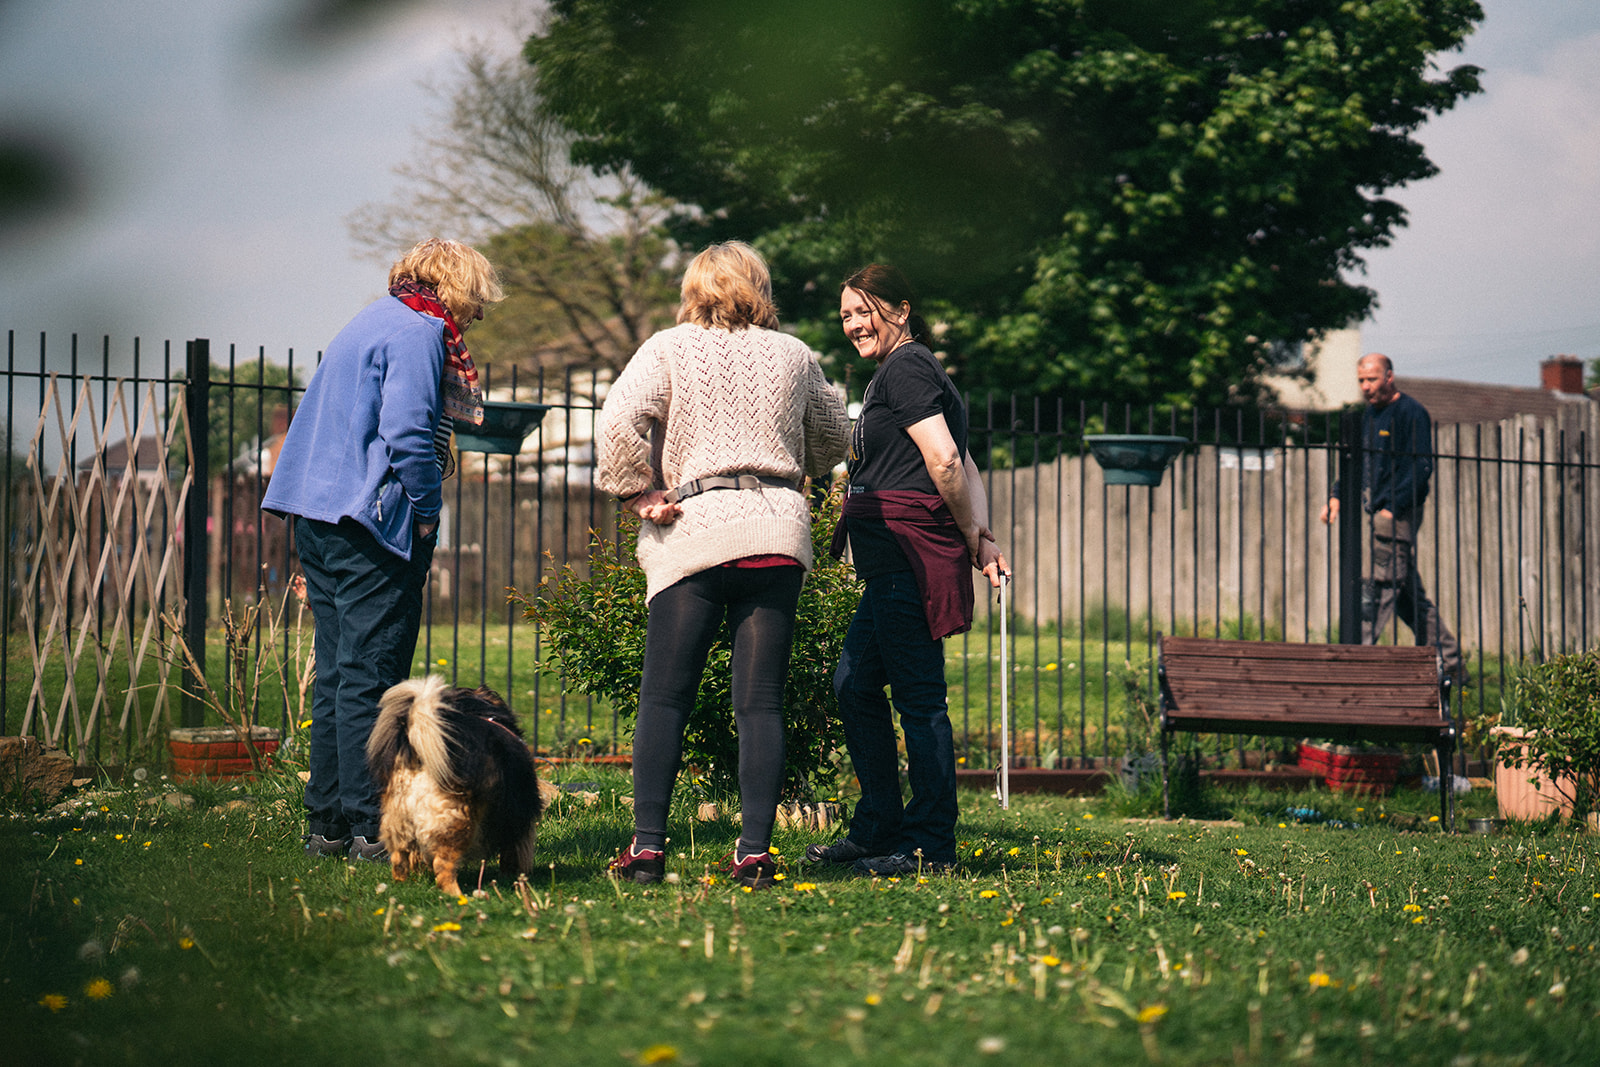 Three ladies stood talking in a community garden space